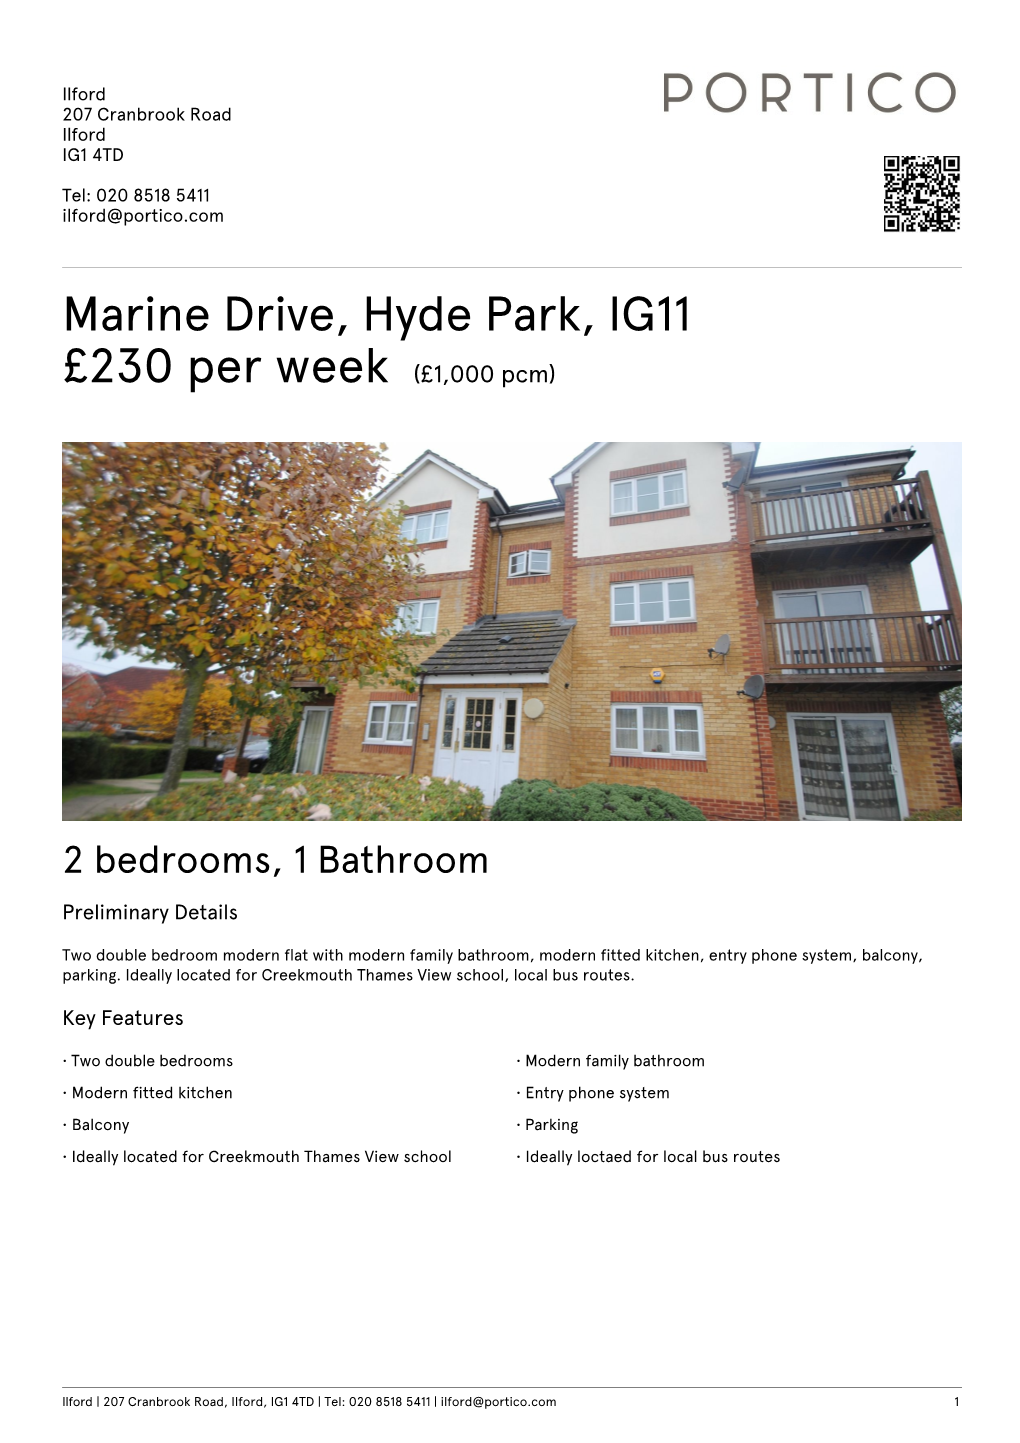 Marine Drive, Hyde Park, IG11 £230 Per Week